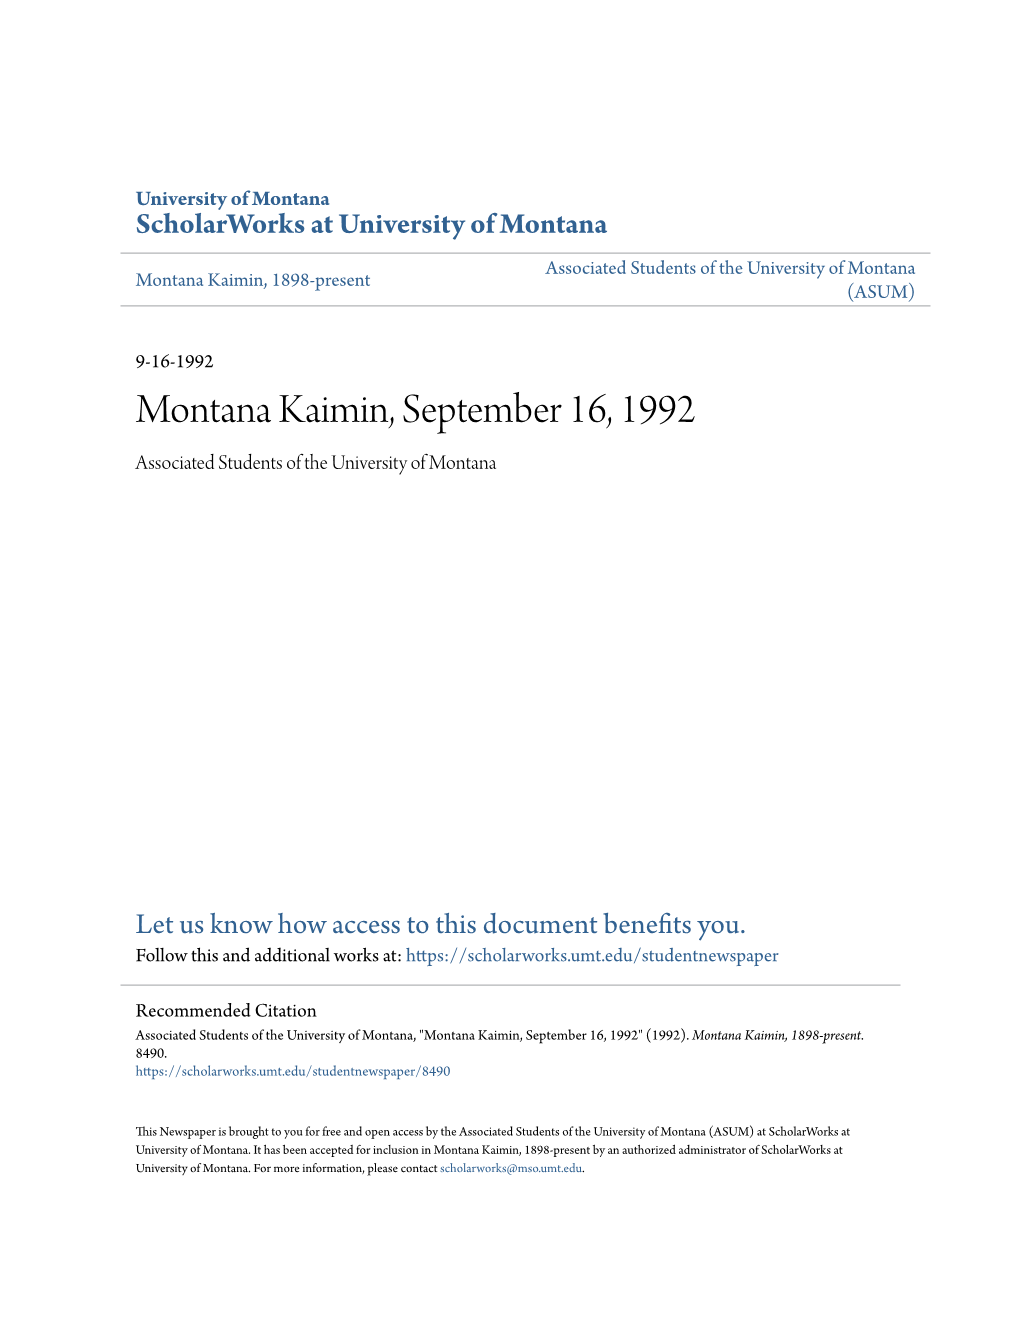 Montana Kaimin, September 16, 1992 Associated Students of the University of Montana